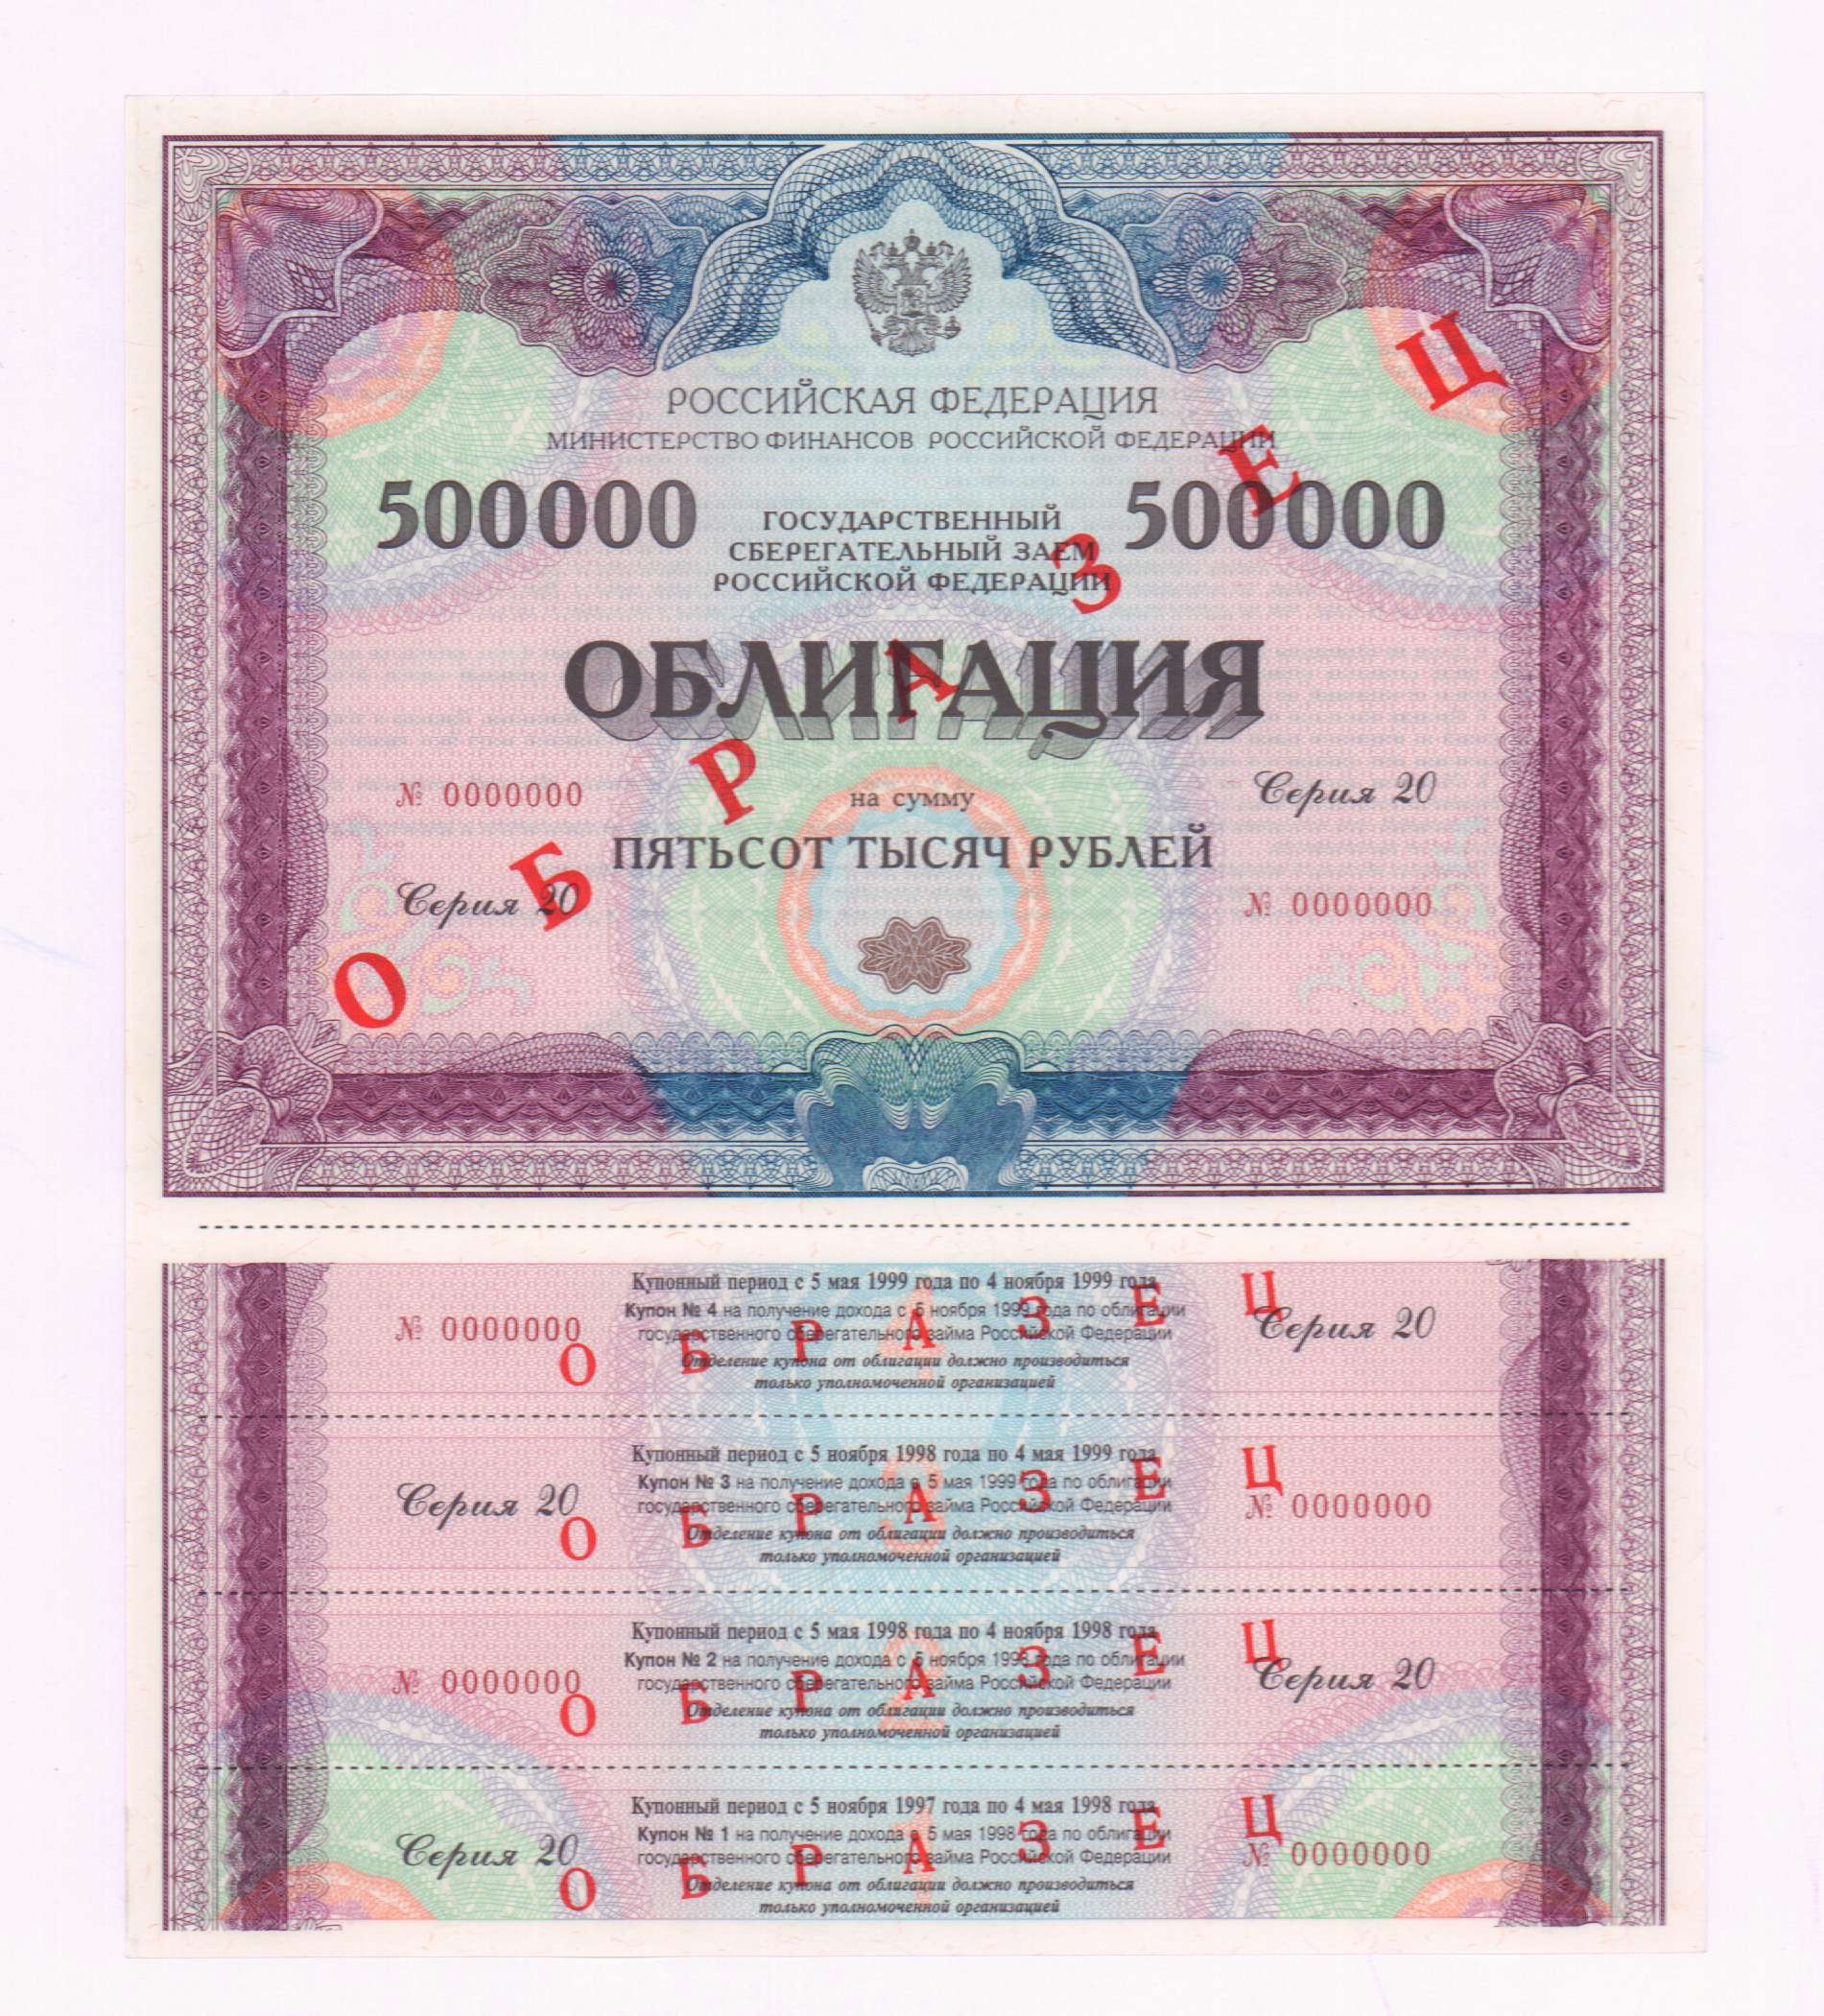 Срочный заём займ 500000 рублей онлайн